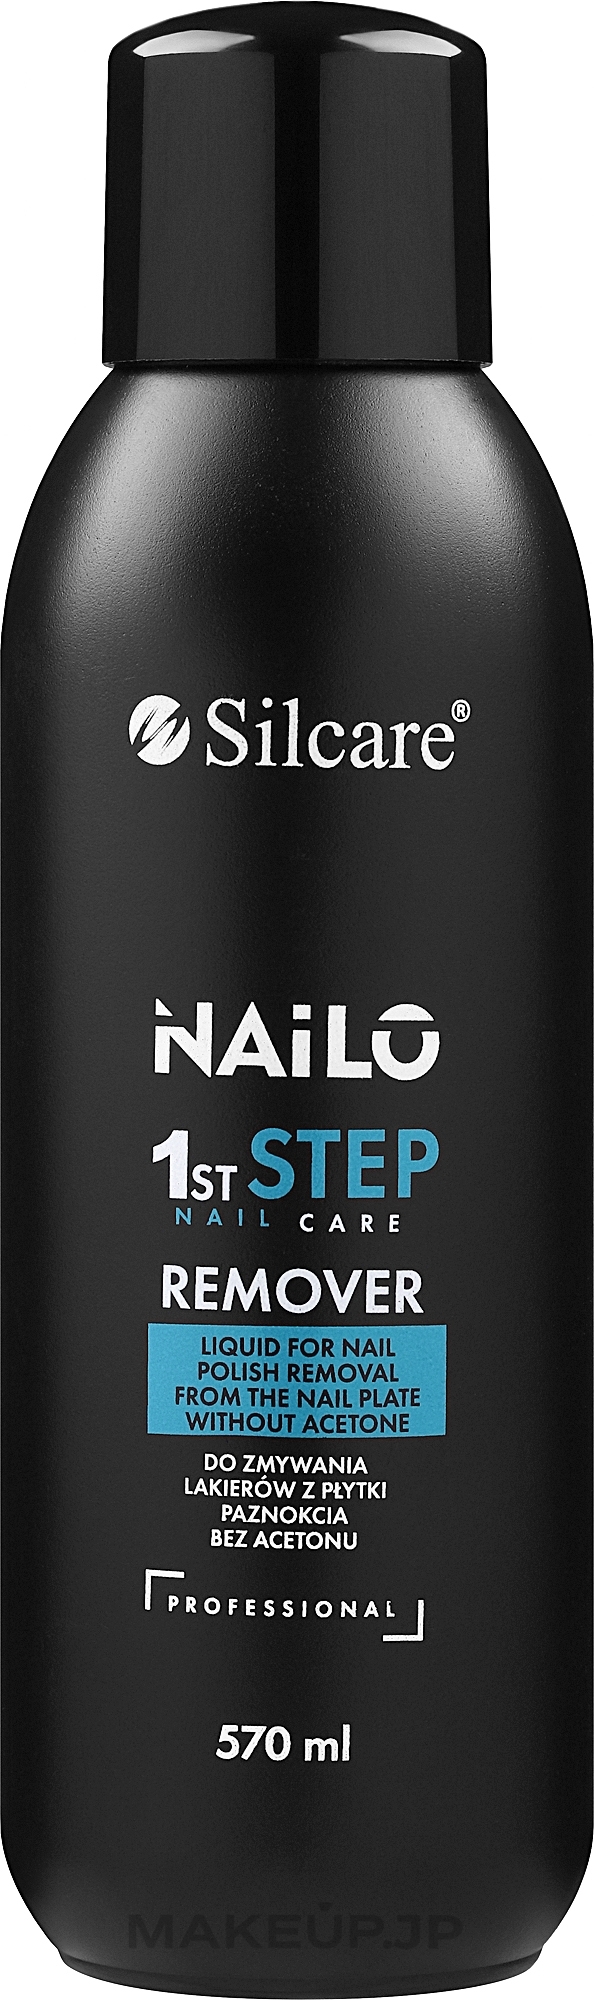 Acetone-Free Nail Polish Remover - Silcare Nailo 1st Step Remover — photo 570 ml